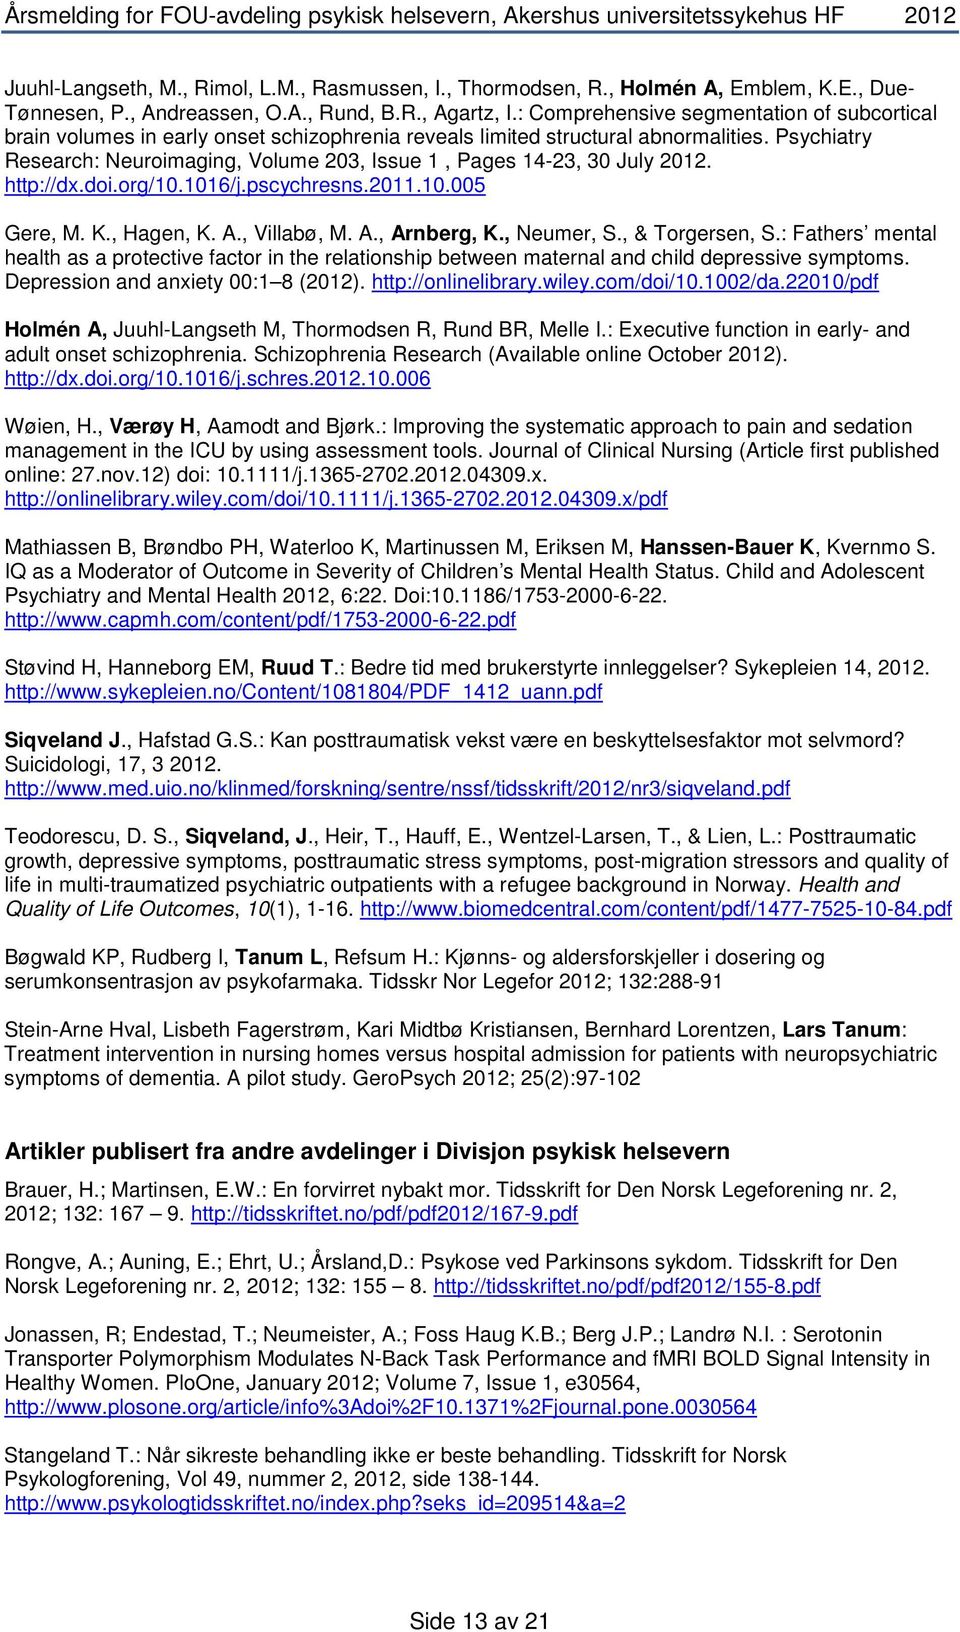 Psychiatry Research: Neuroimaging, Volume 203, Issue 1, Pages 14-23, 30 July 2012. http://dx.doi.org/10.1016/j.pscychresns.2011.10.005 Gere, M. K., Hagen, K. A., Villabø, M. A., Arnberg, K.